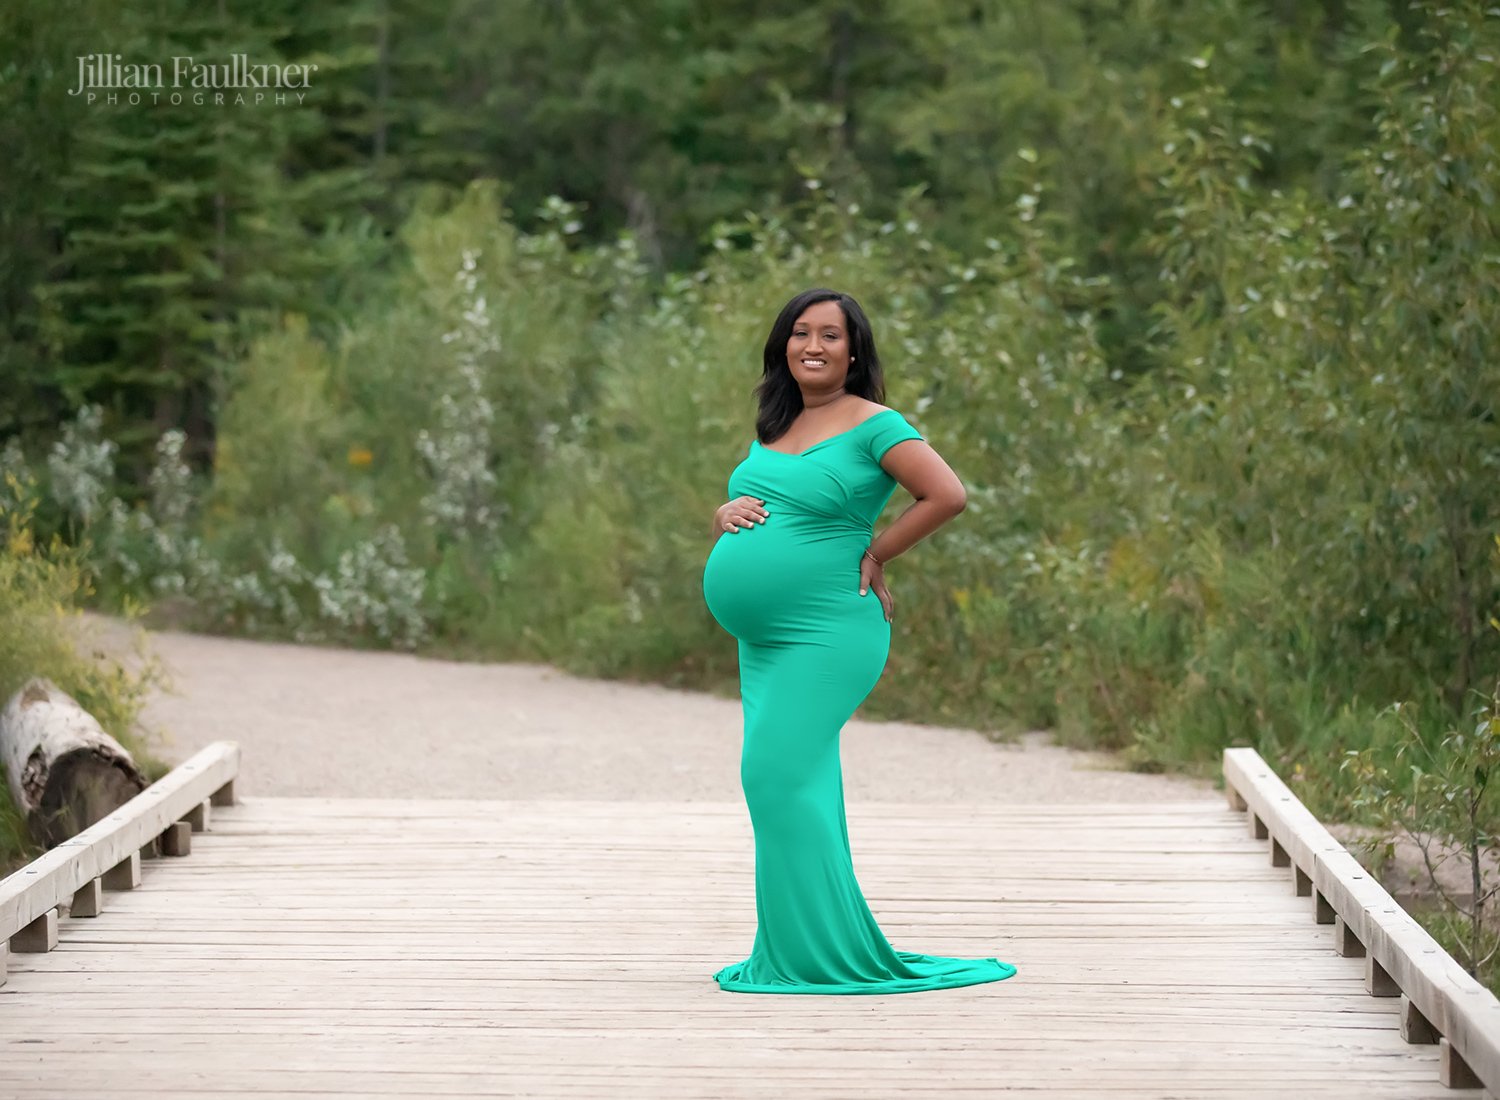 Maternity Photography Outdoors Portfolio - Calgary's #1 Newborn